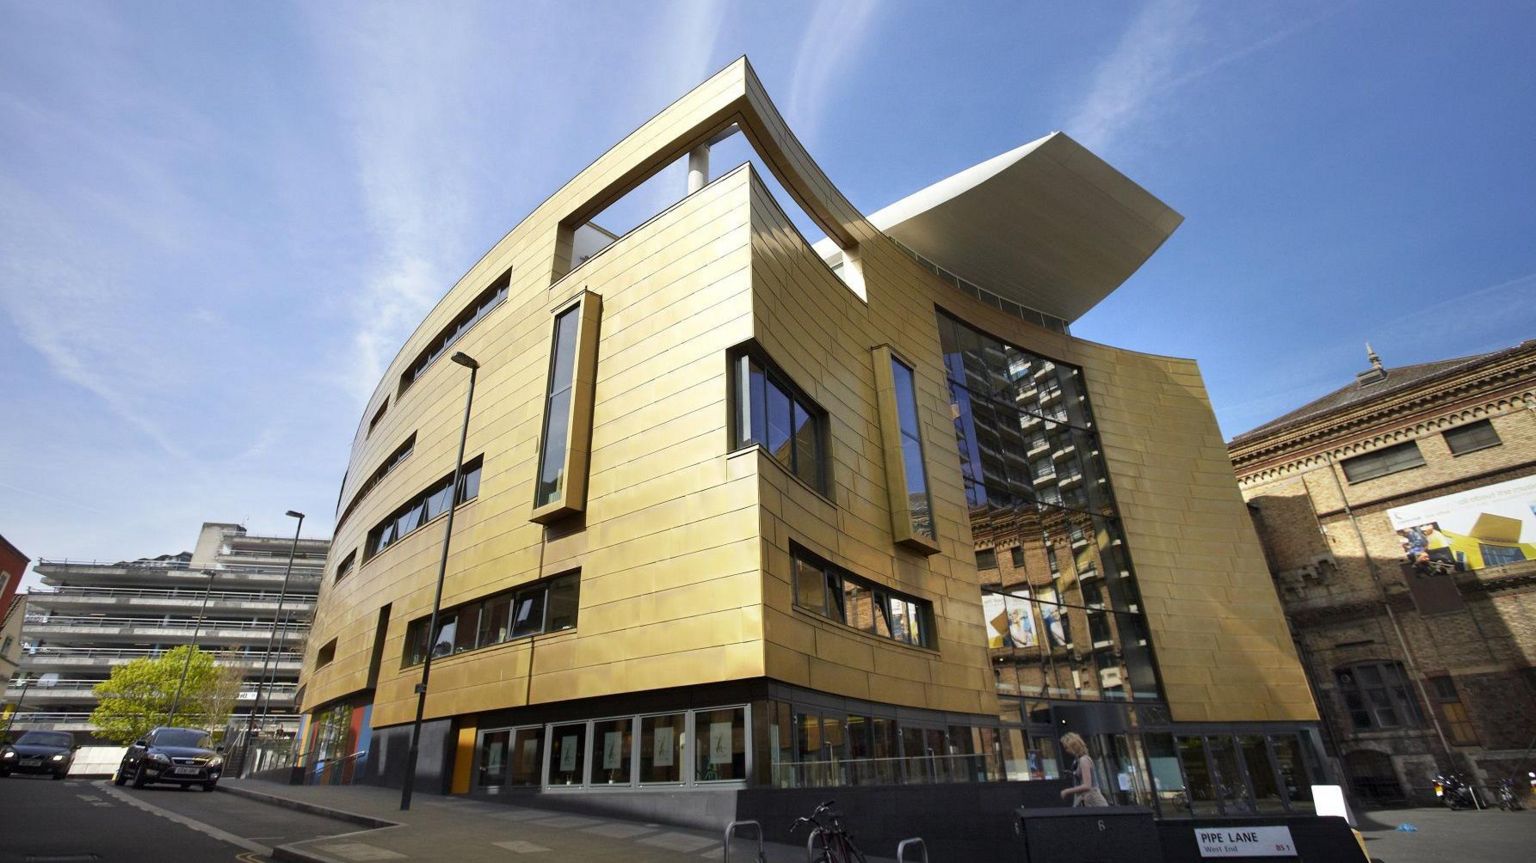 External shot of Bristol Beacon, a large gold building